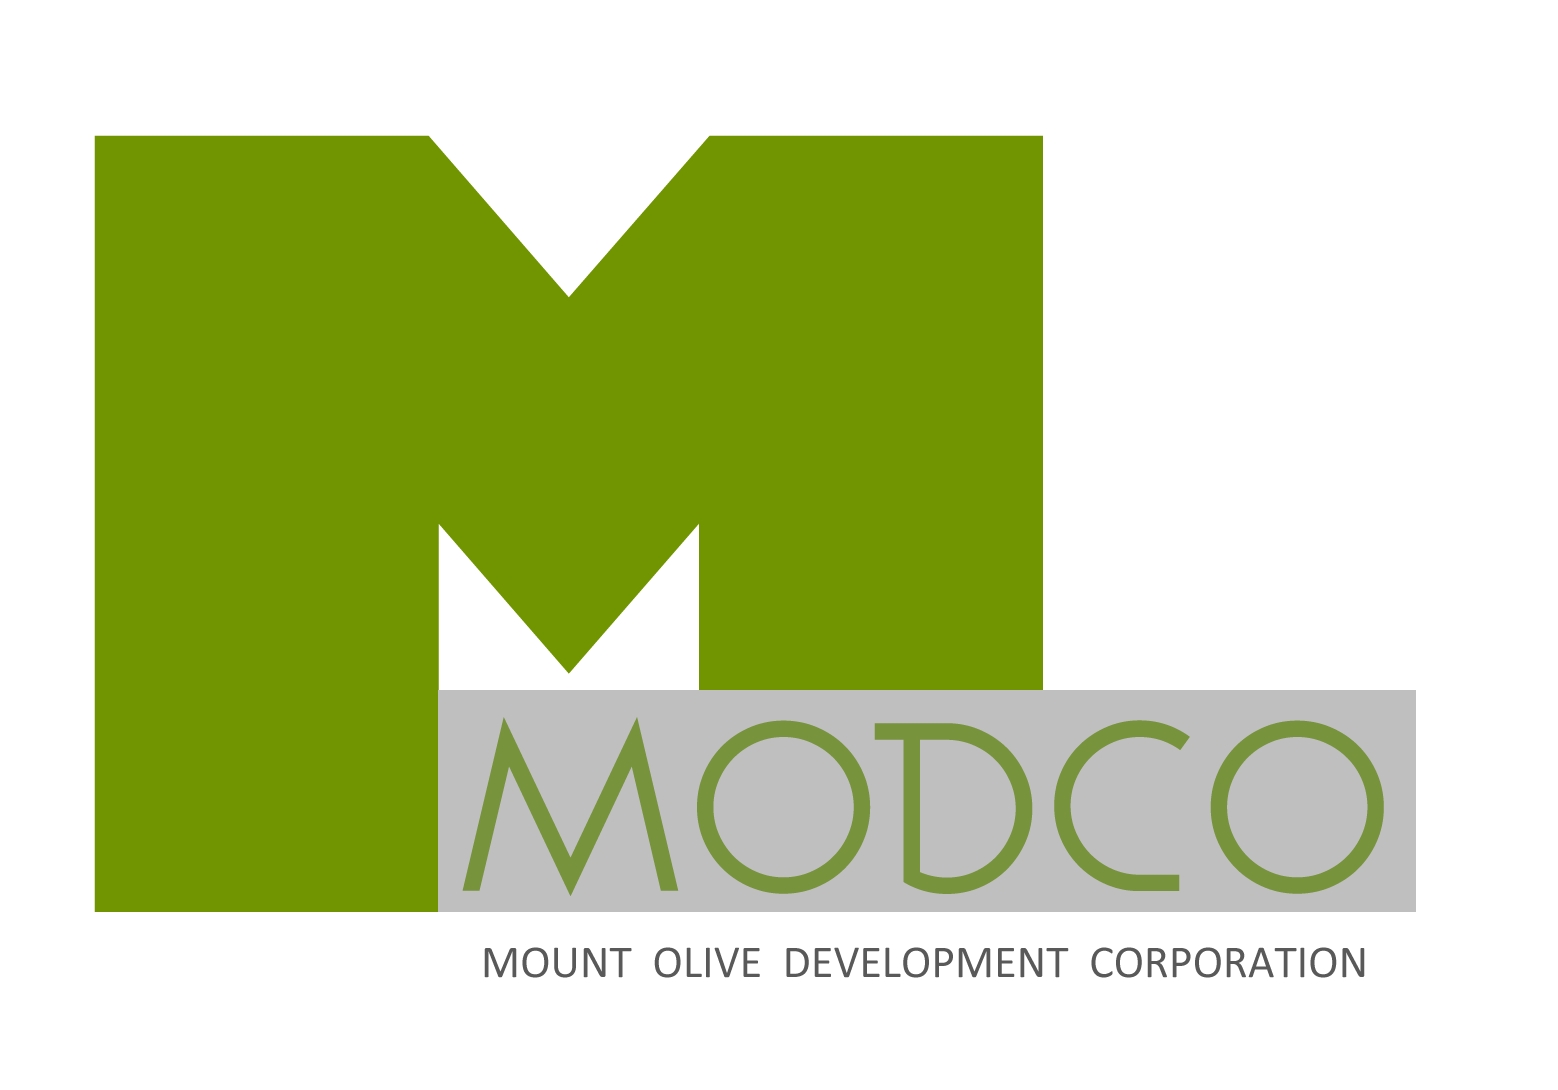 Mount Olive Development Corporation